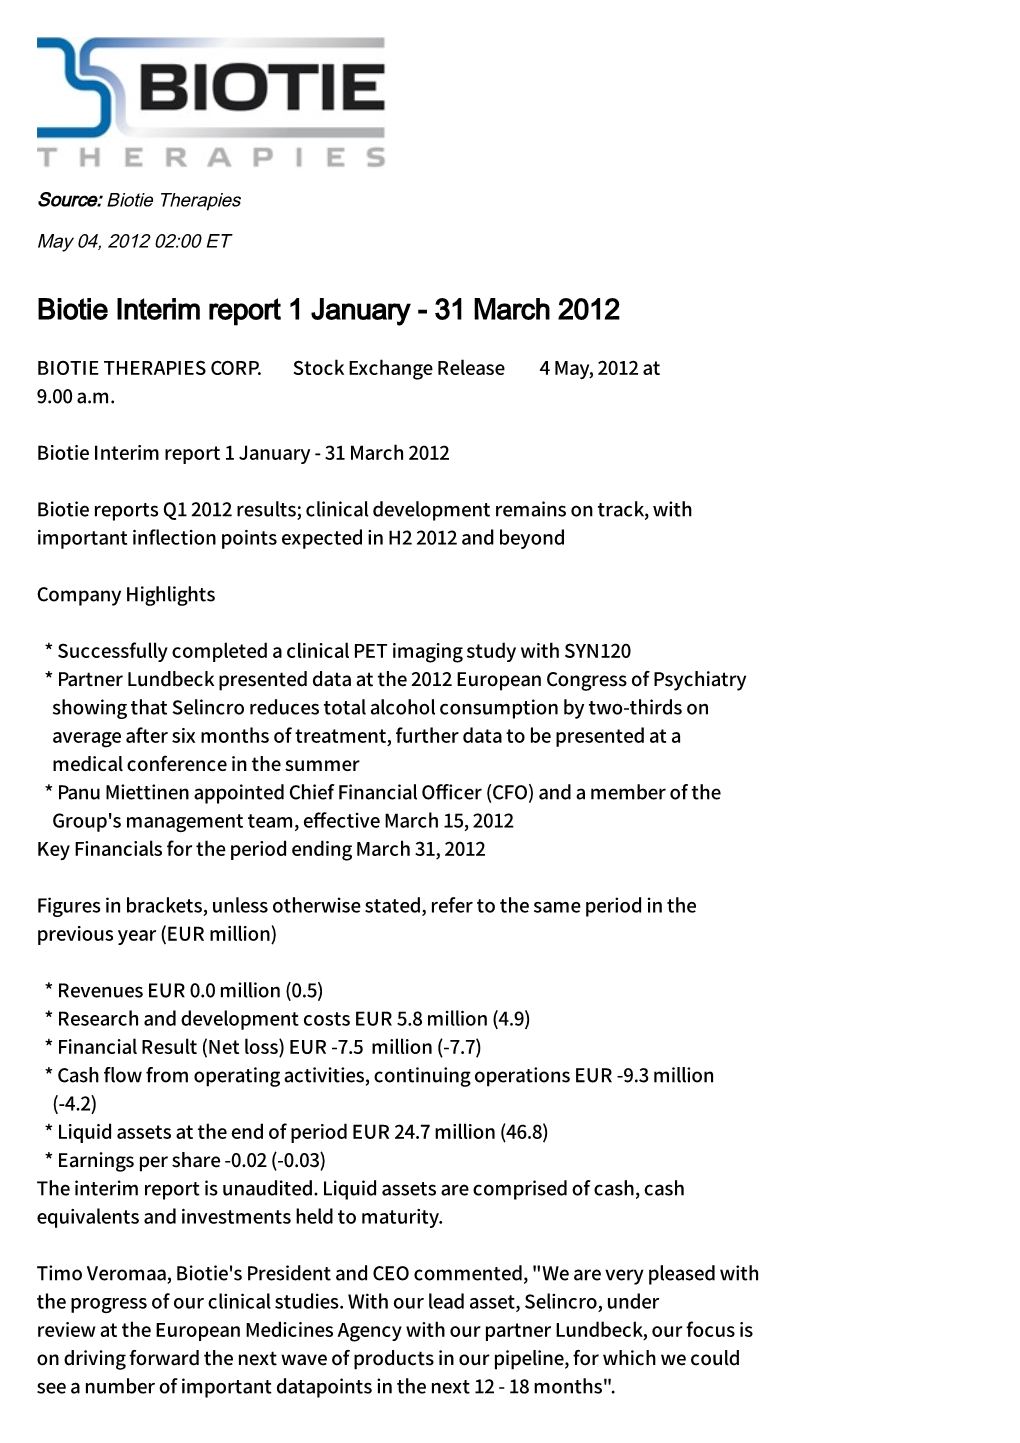 Biotie Interim Report 1 January - 31 March 2012